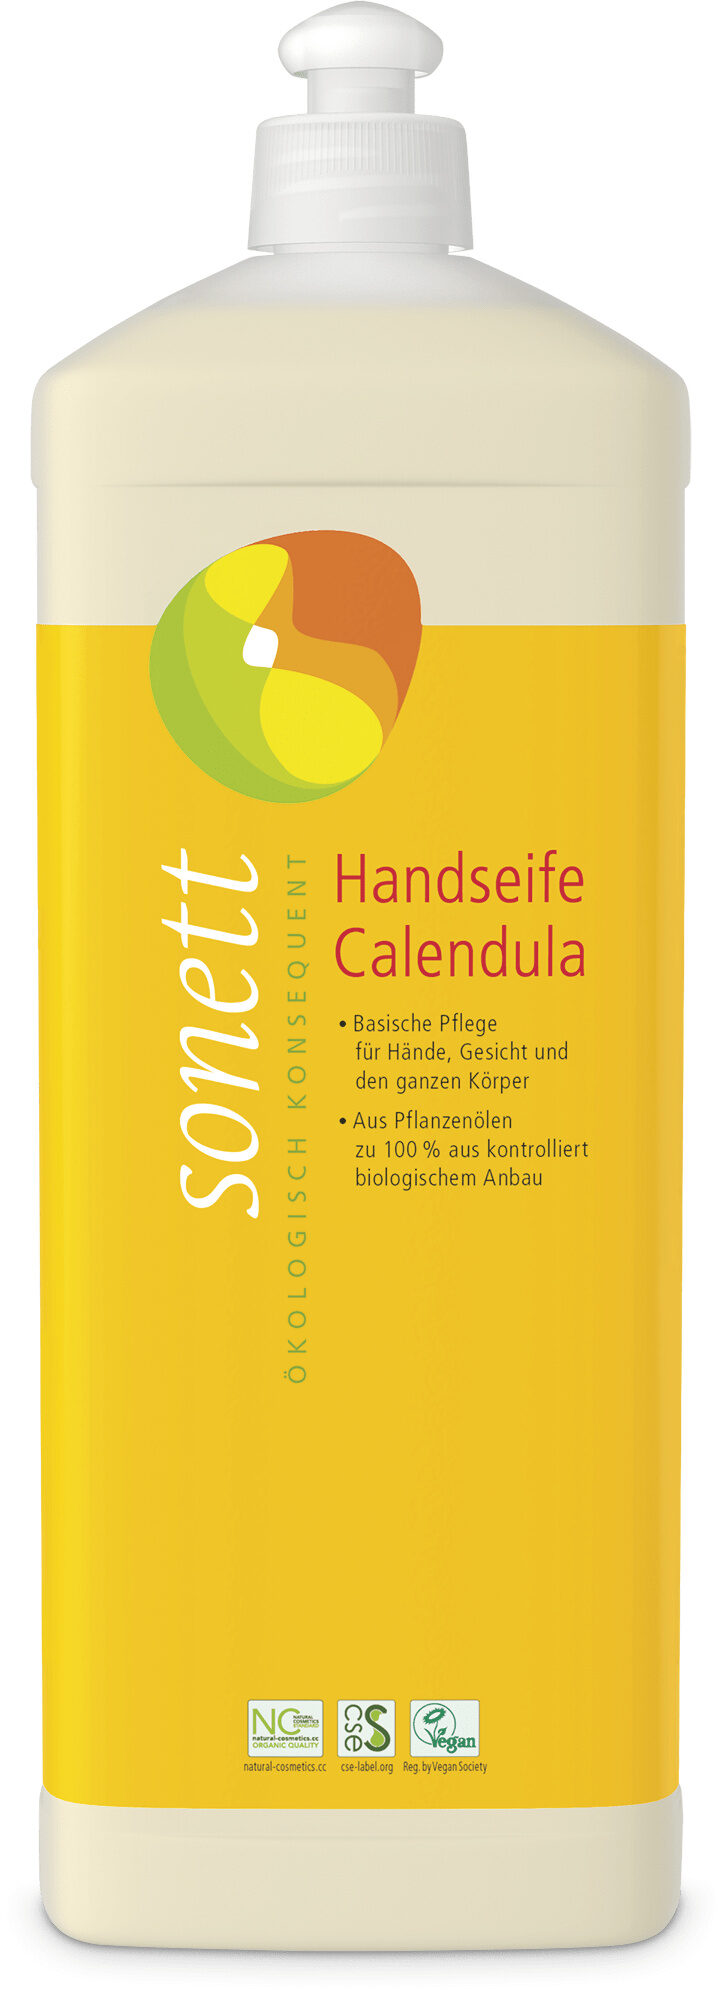 Handseife Calendula - Tuote - de